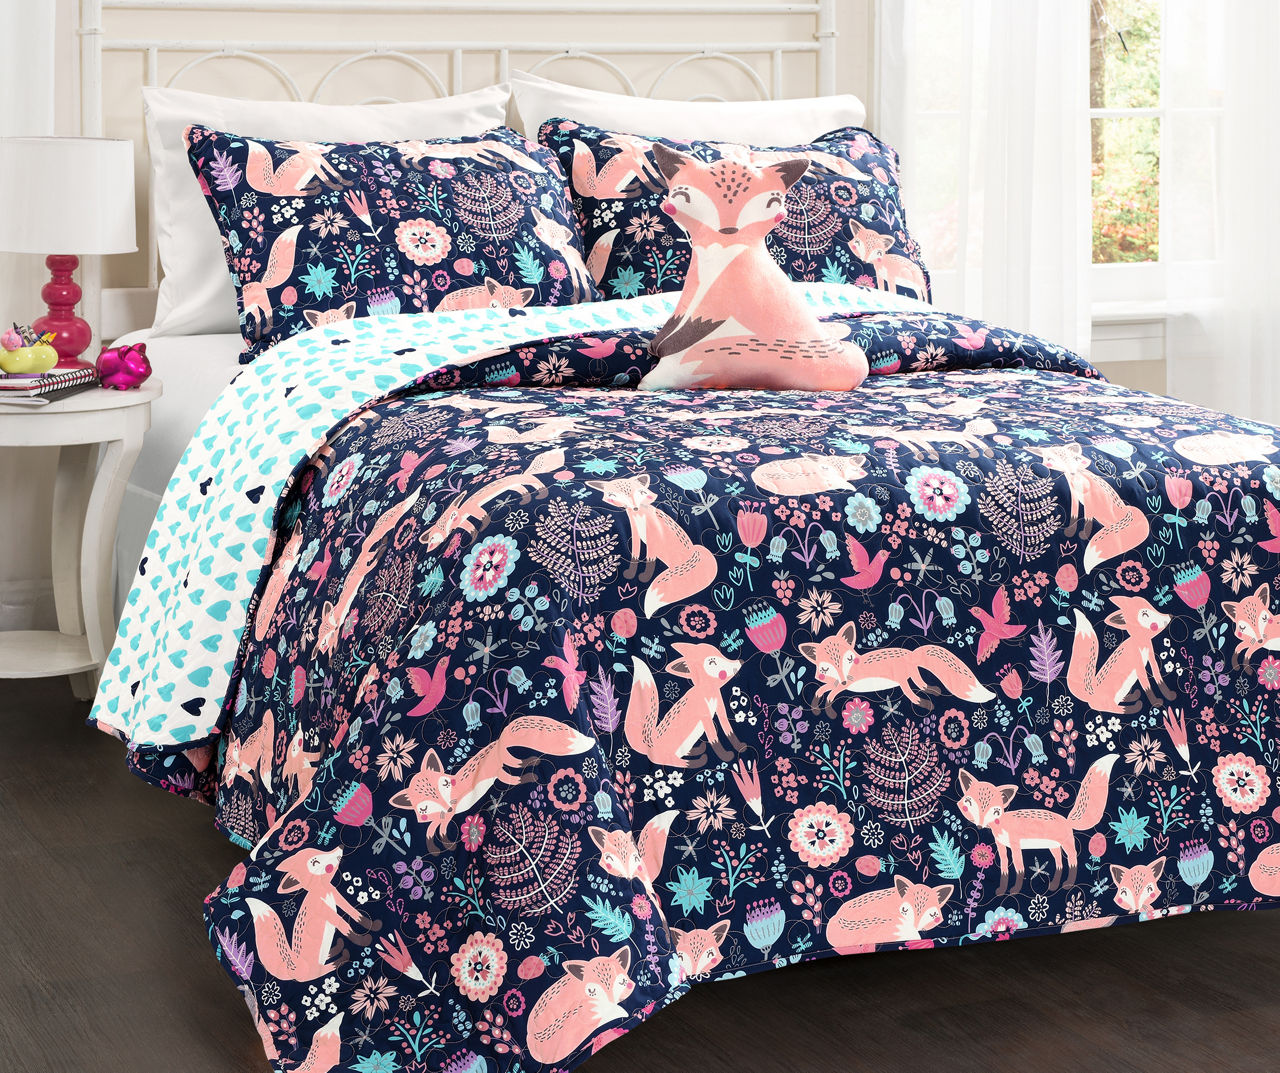 Pixie Fox Navy & Pink Floral Full/Queen 4-Piece Quilt Set